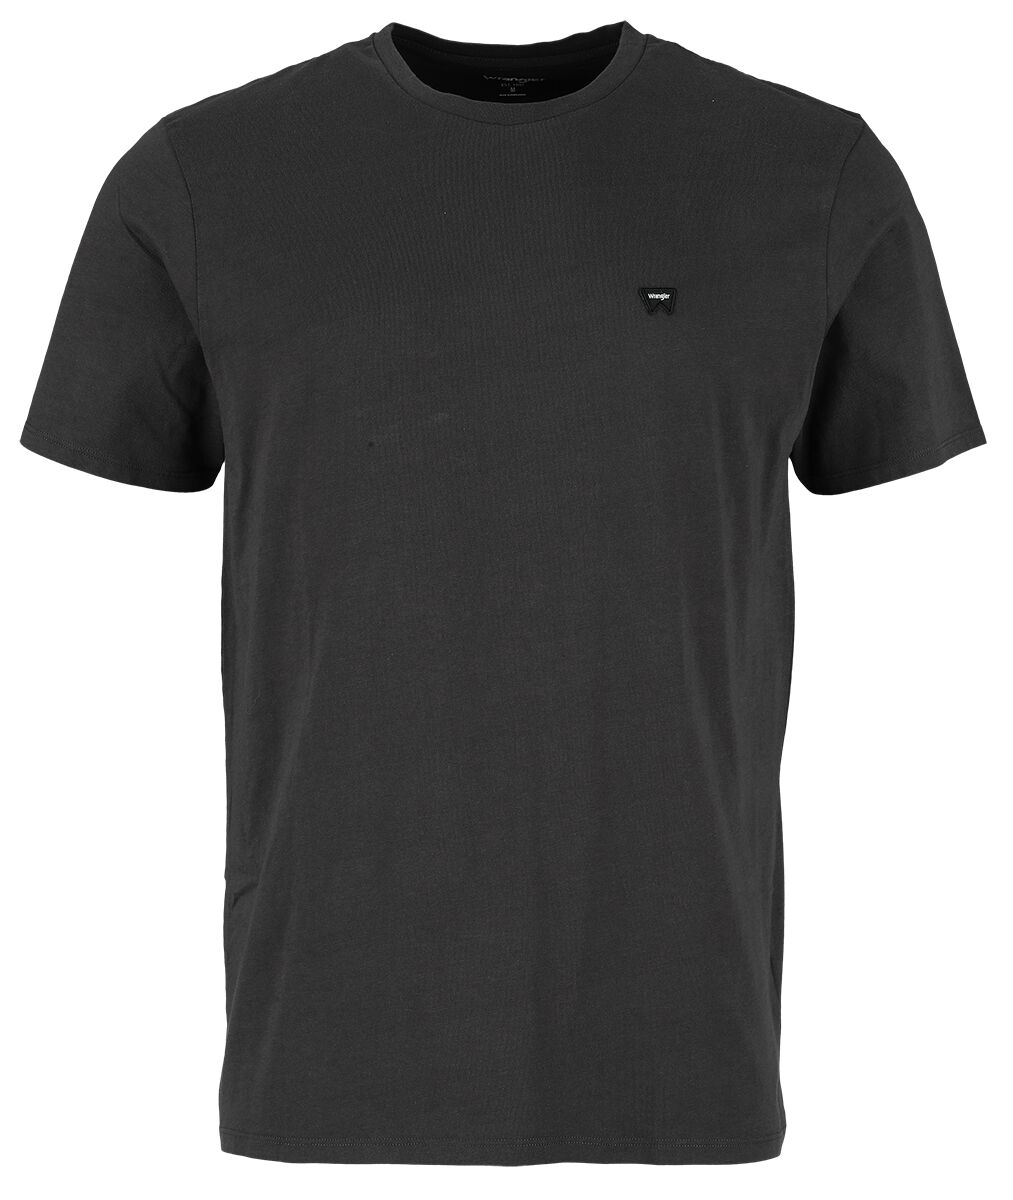 Wrangler Sign Off Tee Faded Black T-Shirt schwarz in L